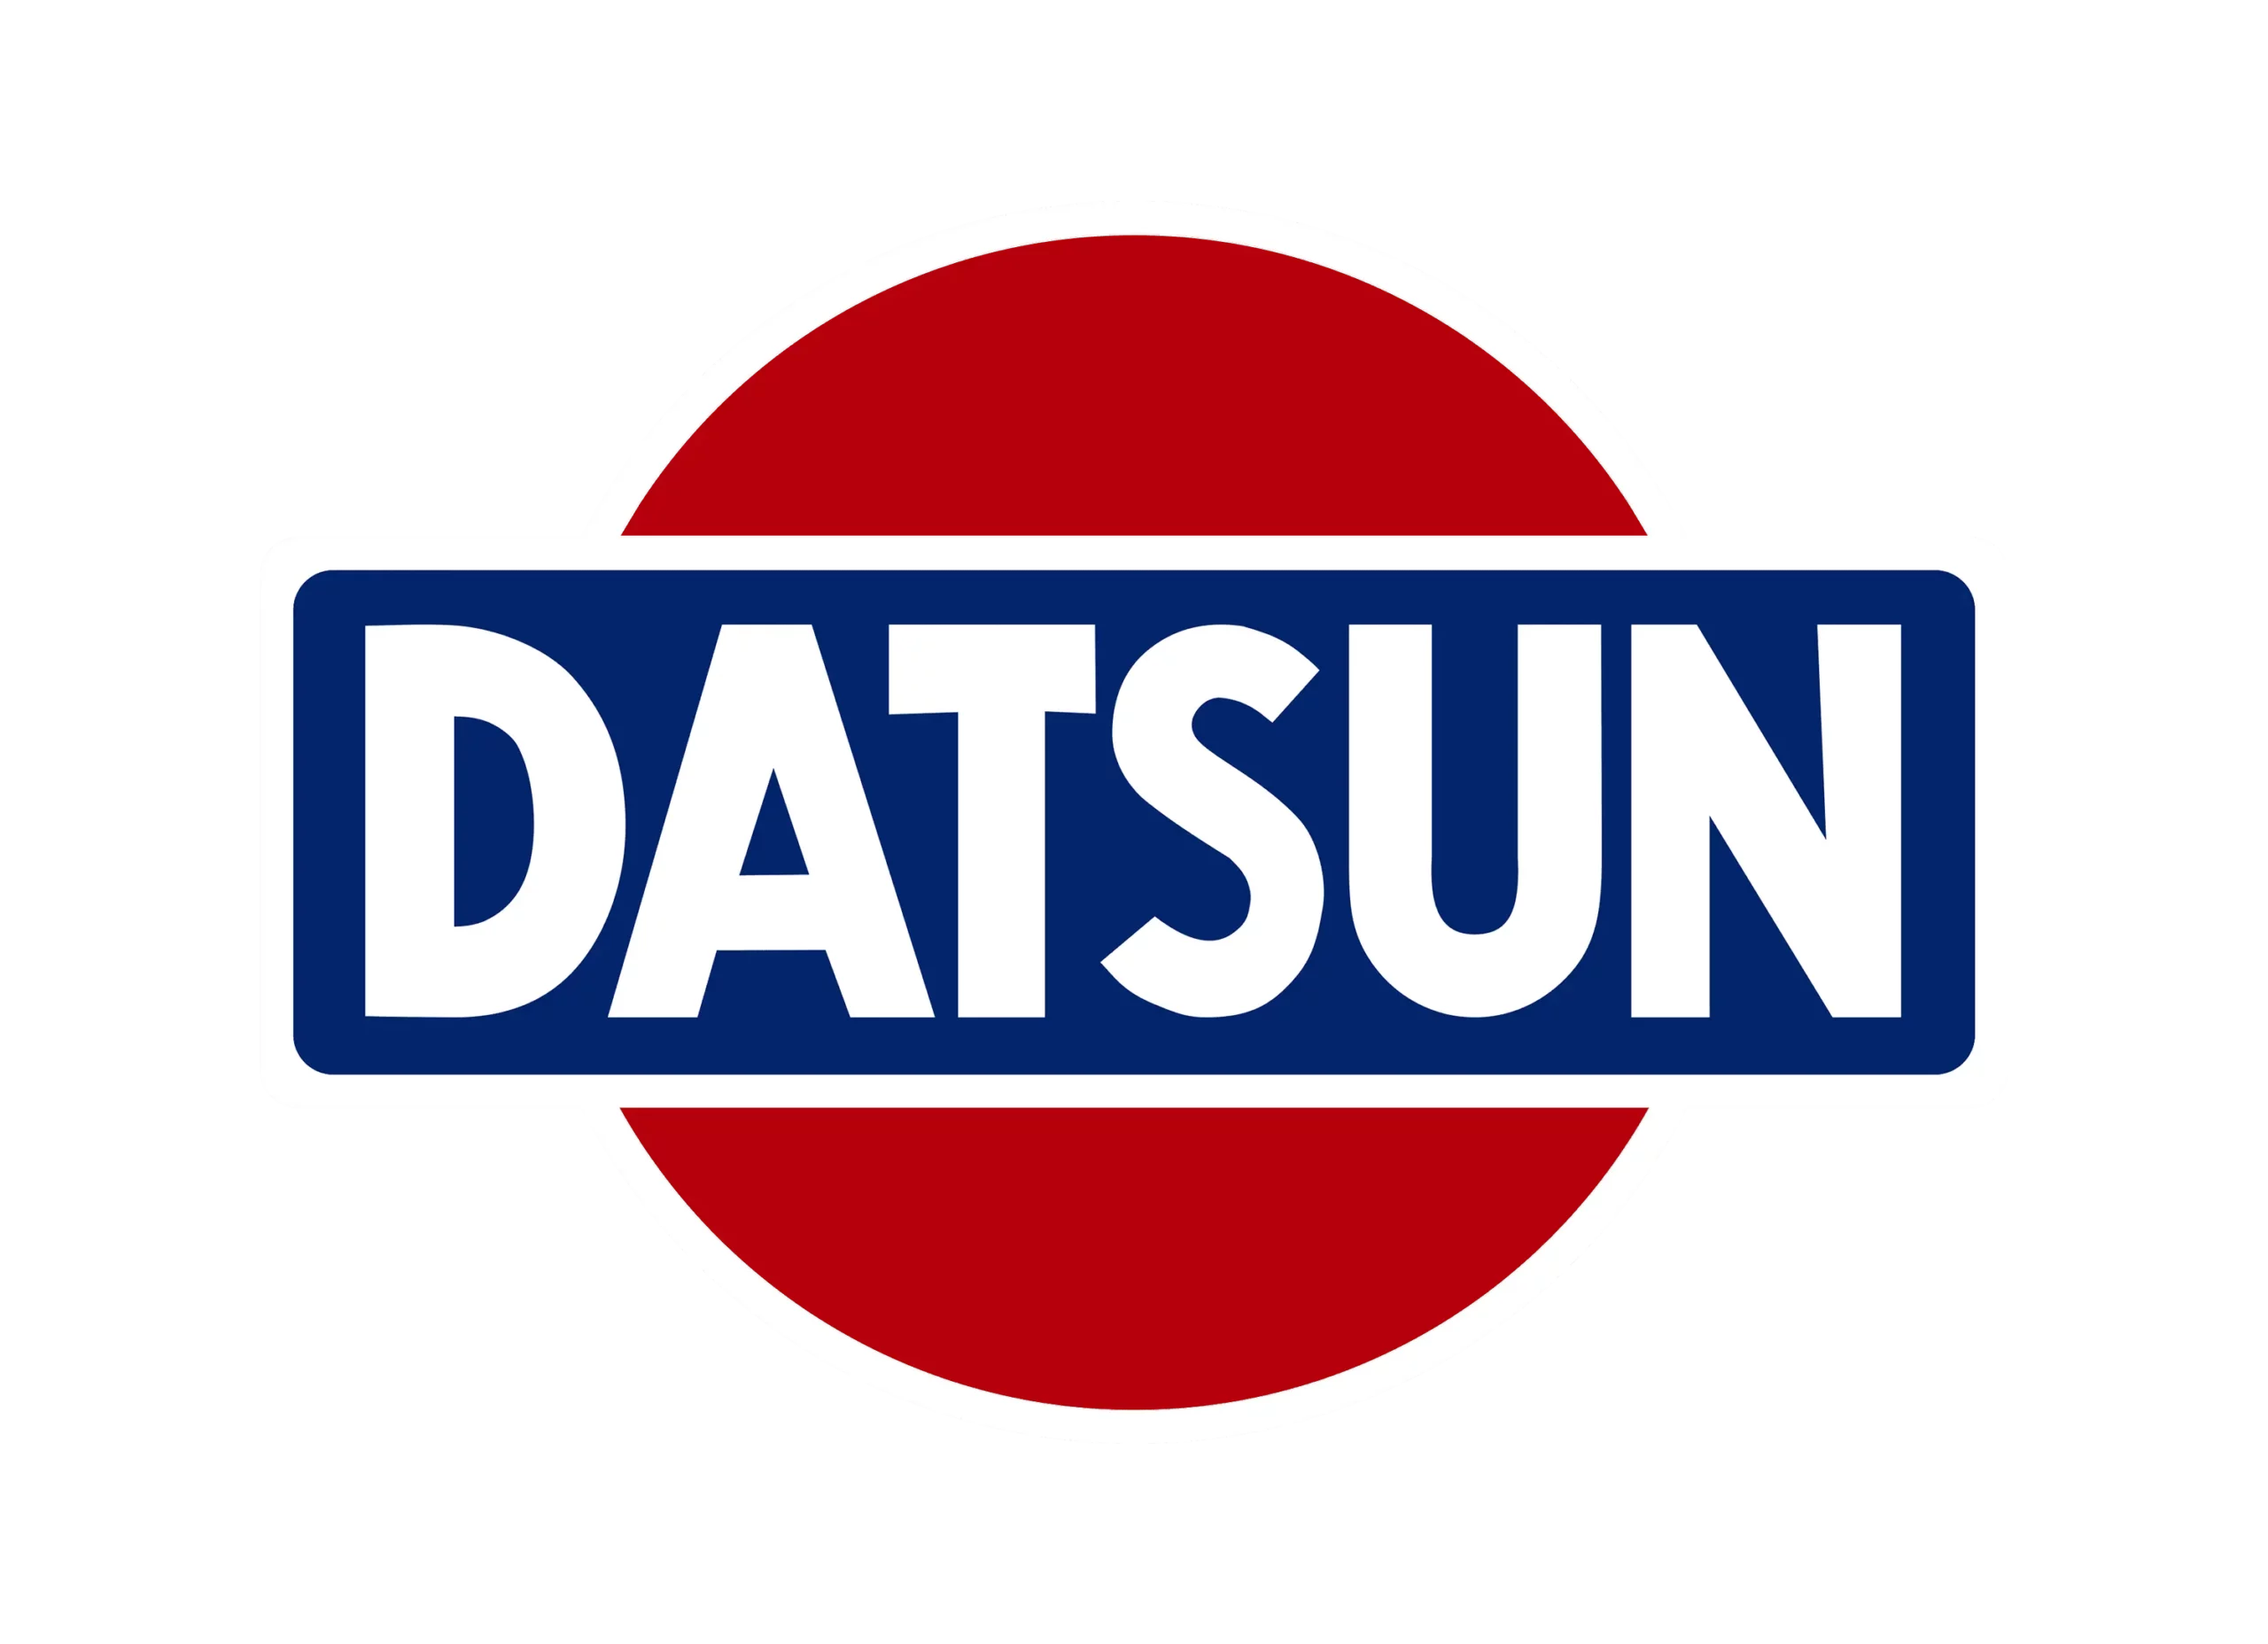 Datsun logo 1935-1976